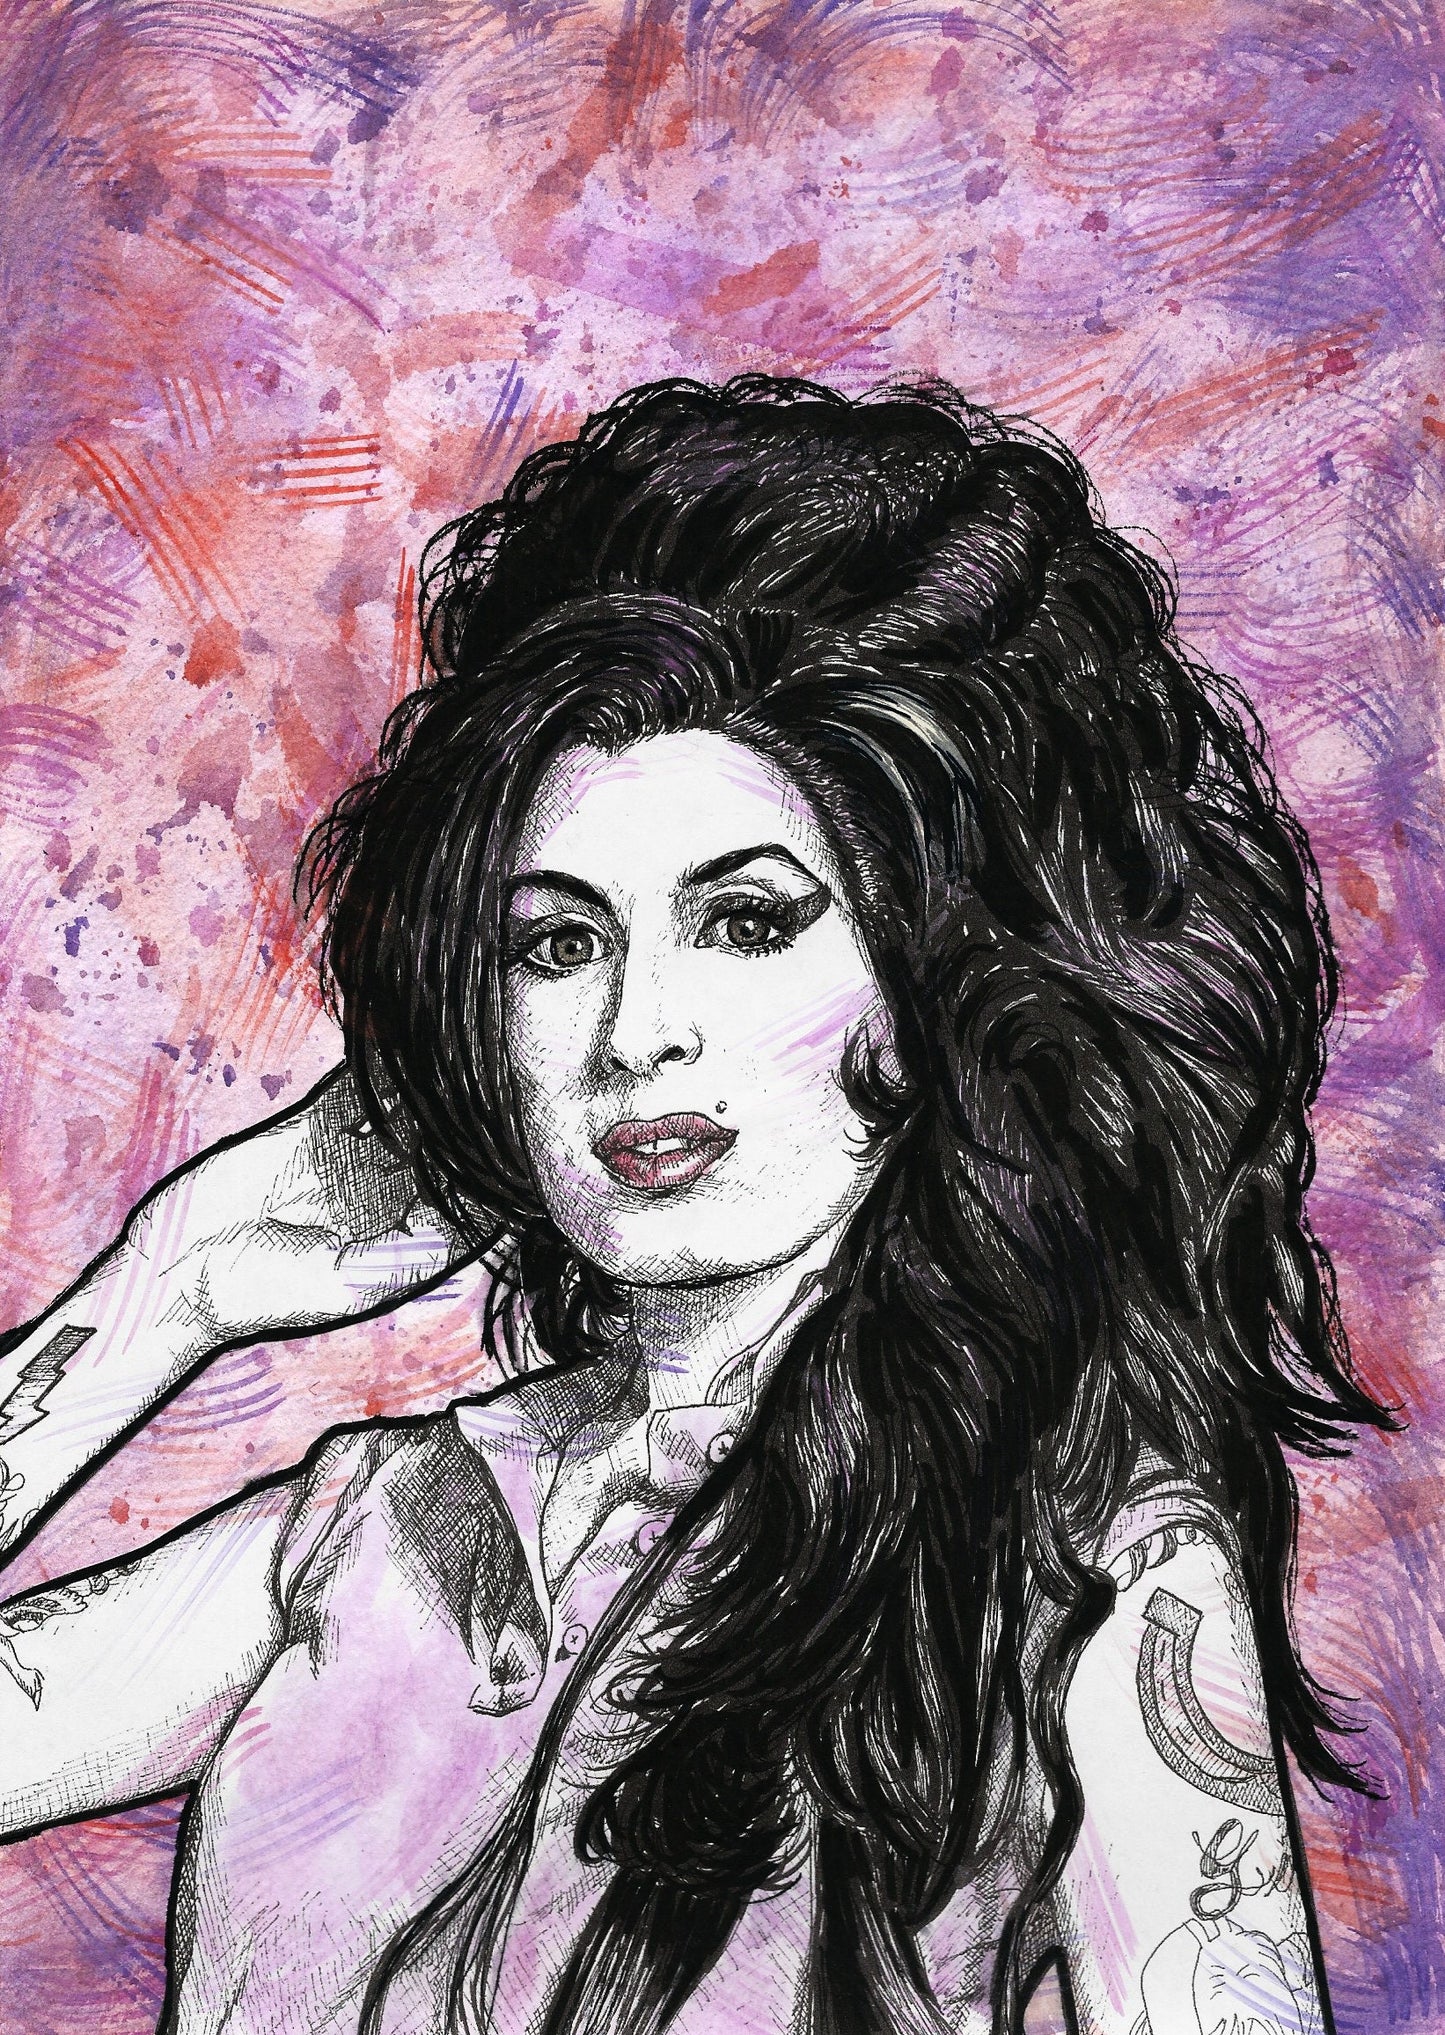 Amy Winehouse watercolour and ink portrait unframed, Amy Winehouse wall art, music artist portrait, celebrity portrait, original artwork